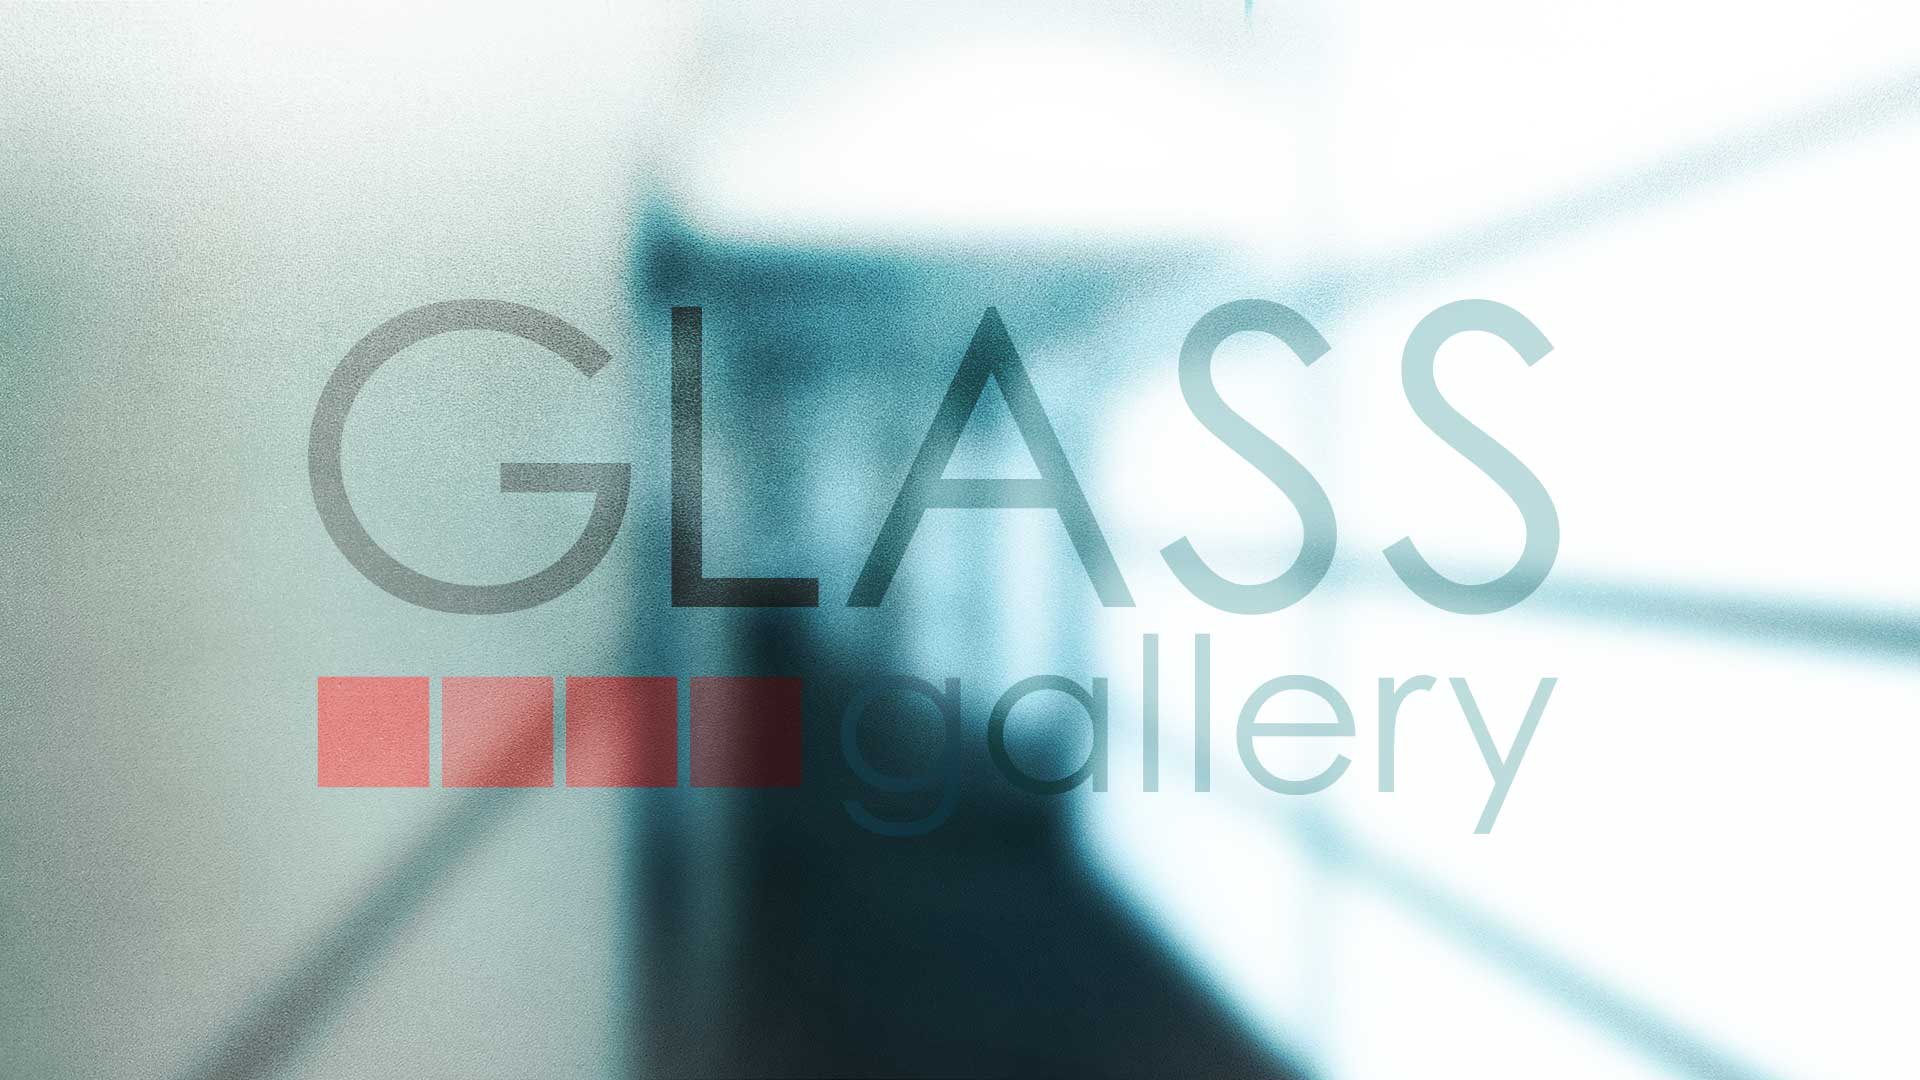 Glass gallery